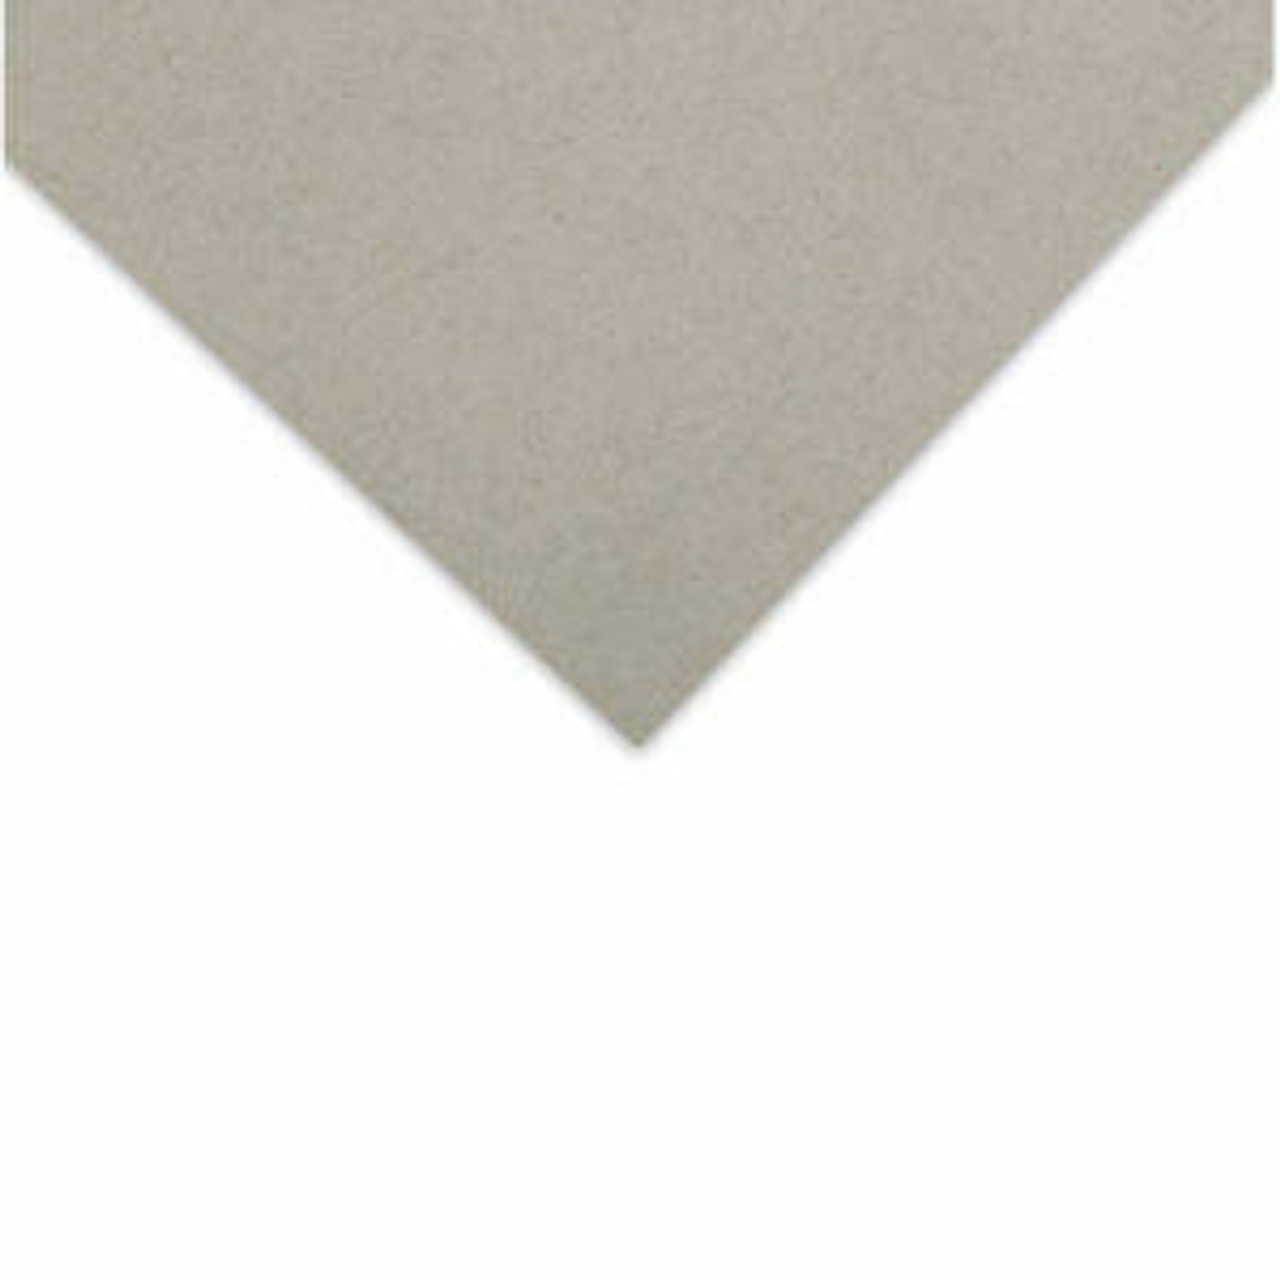 Strathmore Toned Mixed Media Paper Pad Series 400 6 x 8 15 Sheets Tan